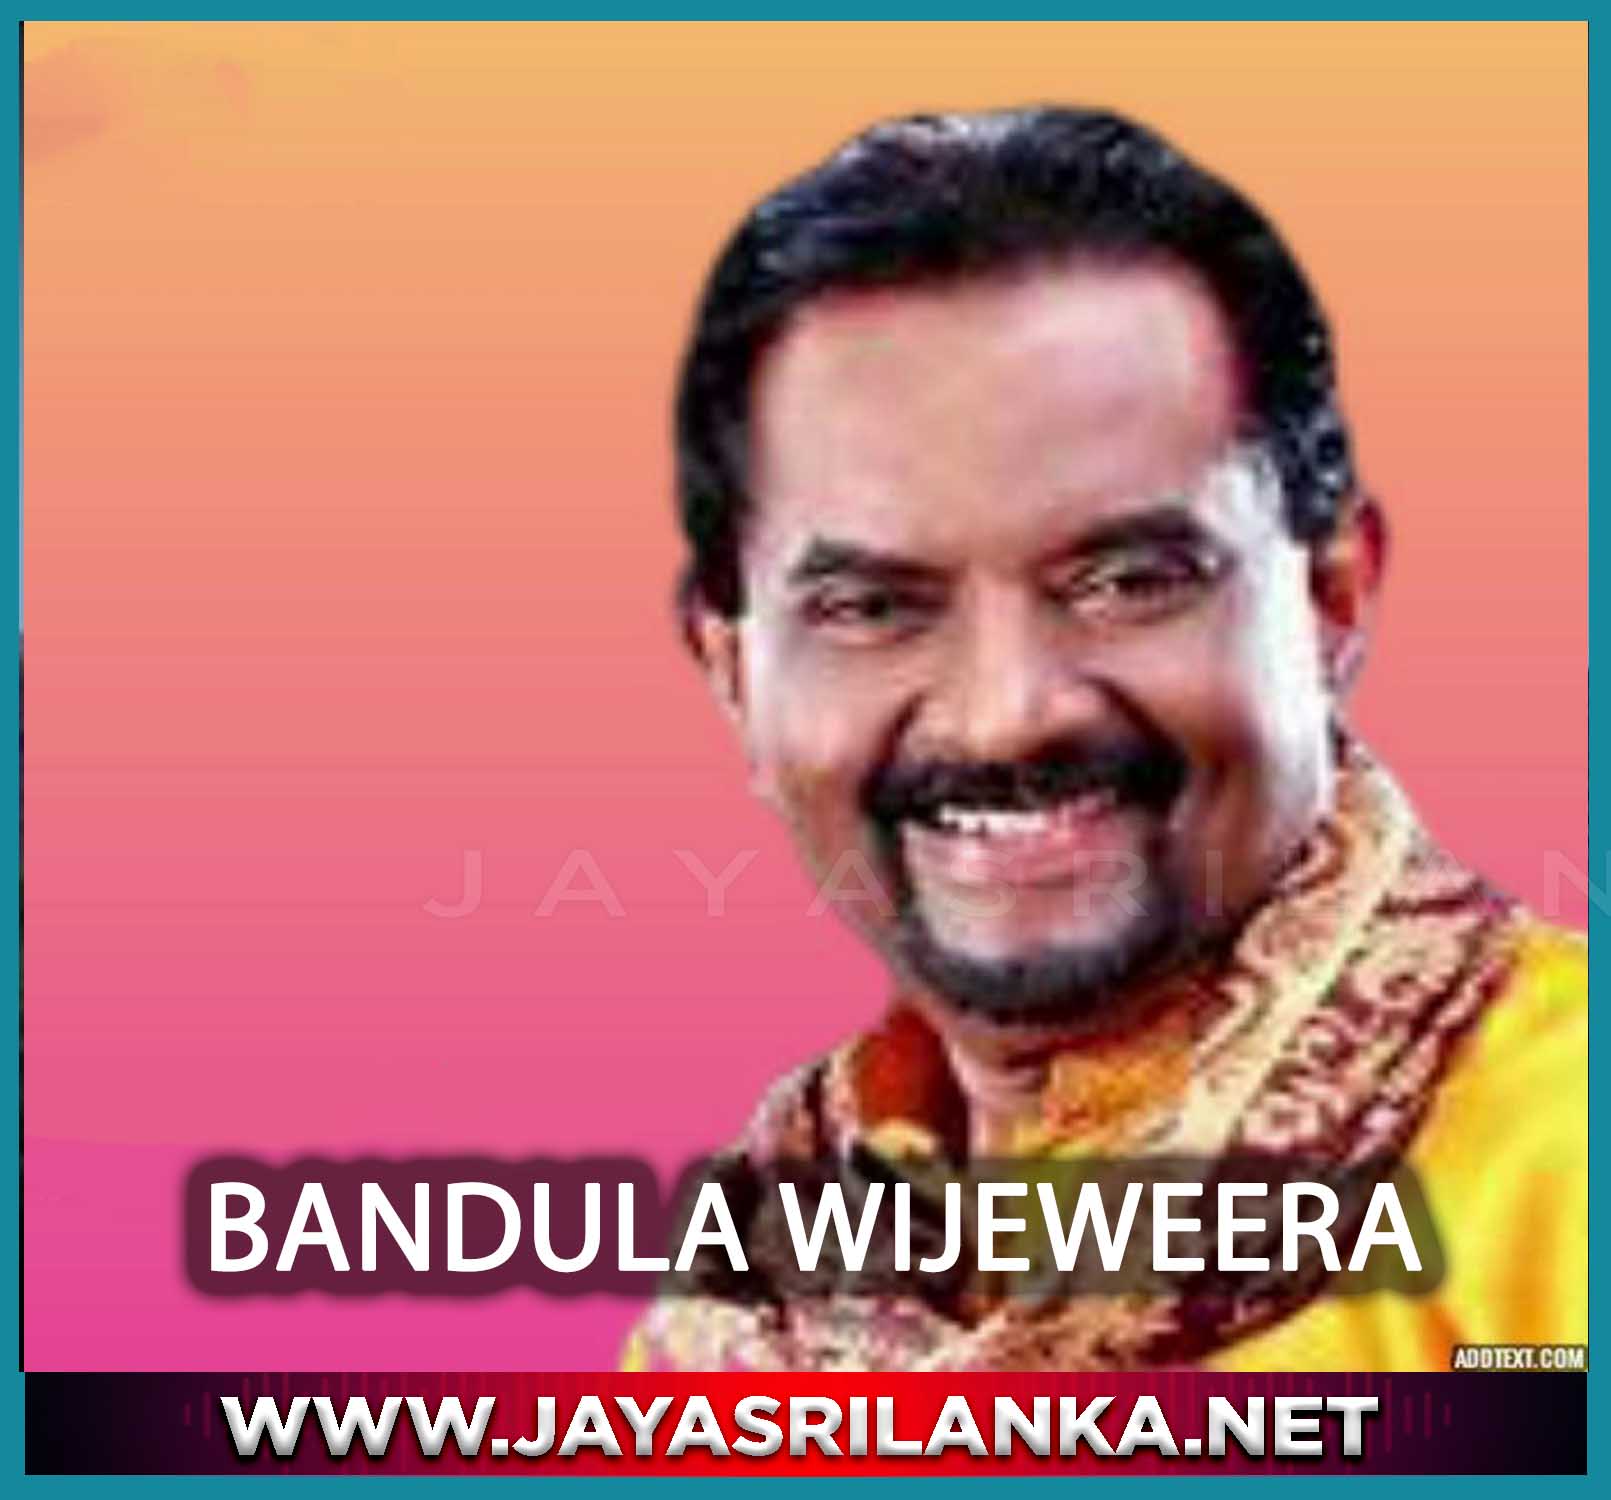 Guru Gedarata Yana Mage Puthanu - Bandula Wijeweera mp3 Image